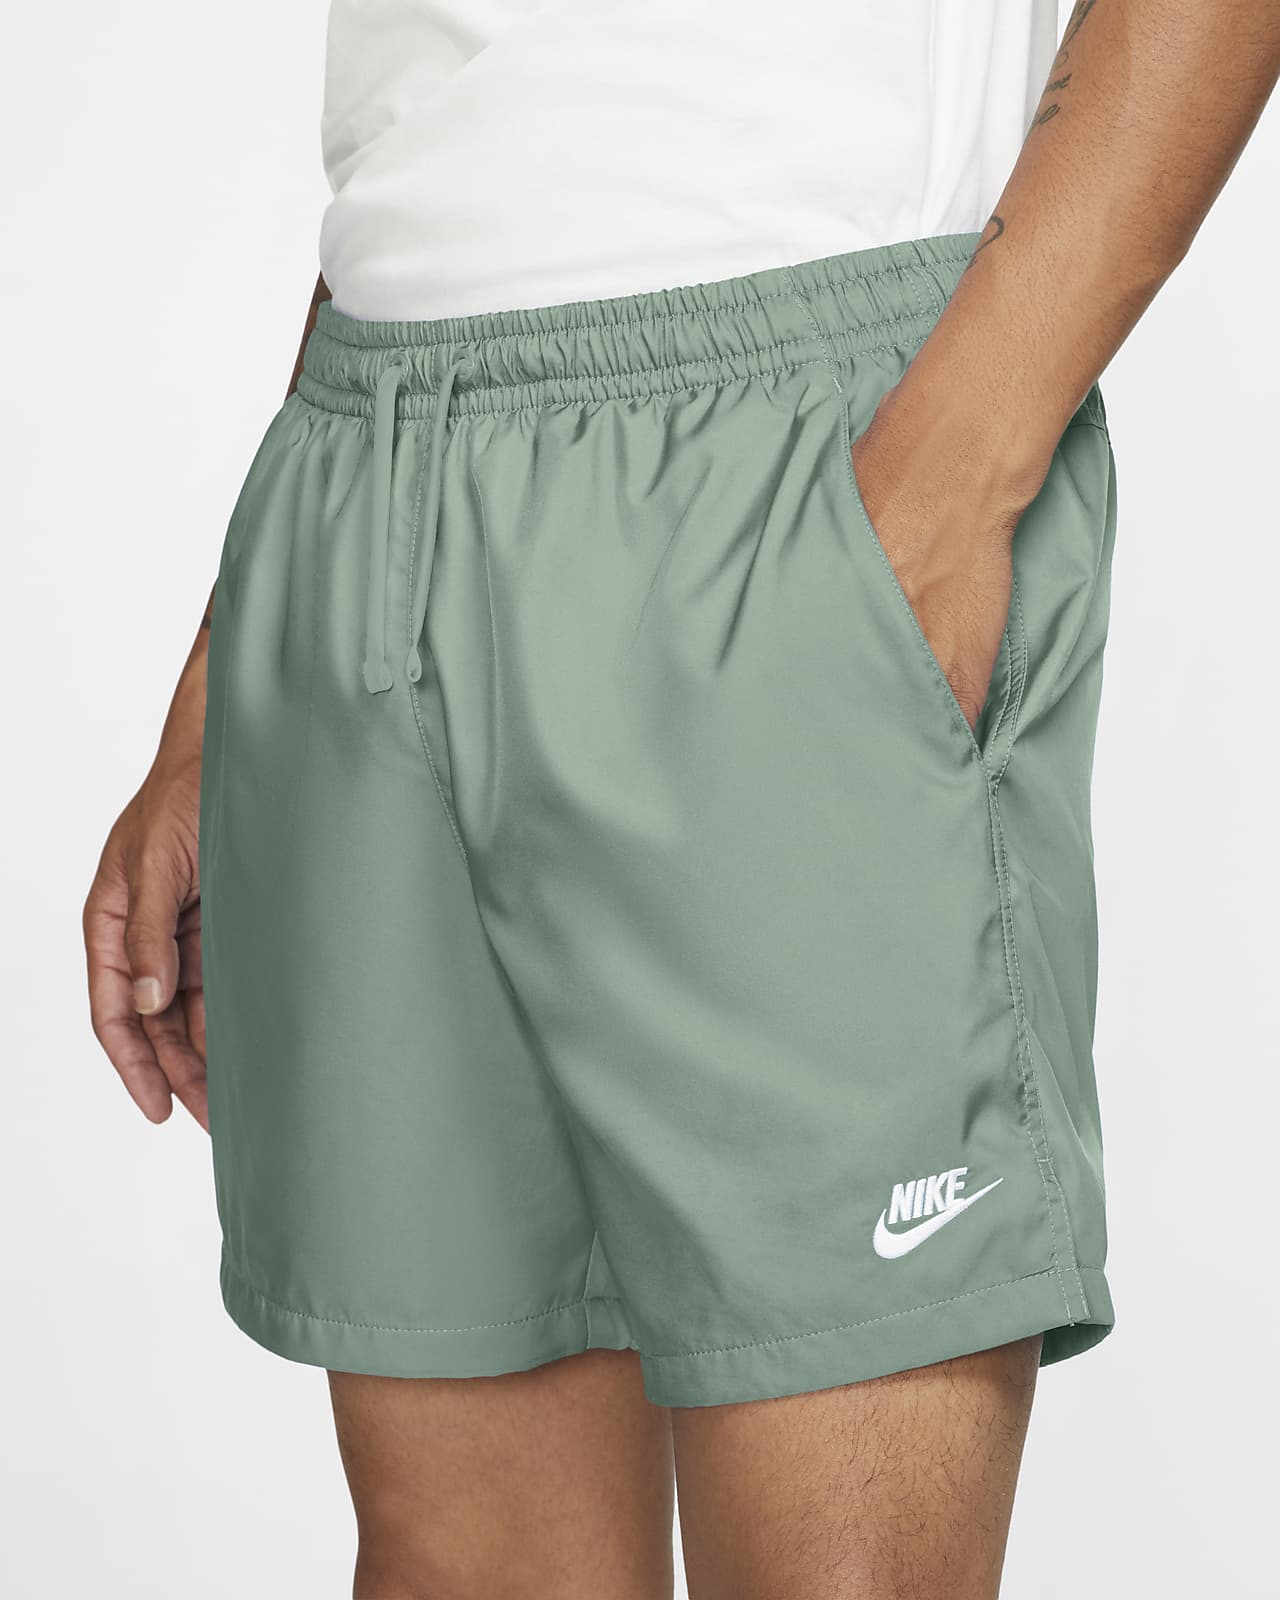 Buy > mens pajama shorts amazon > in stock